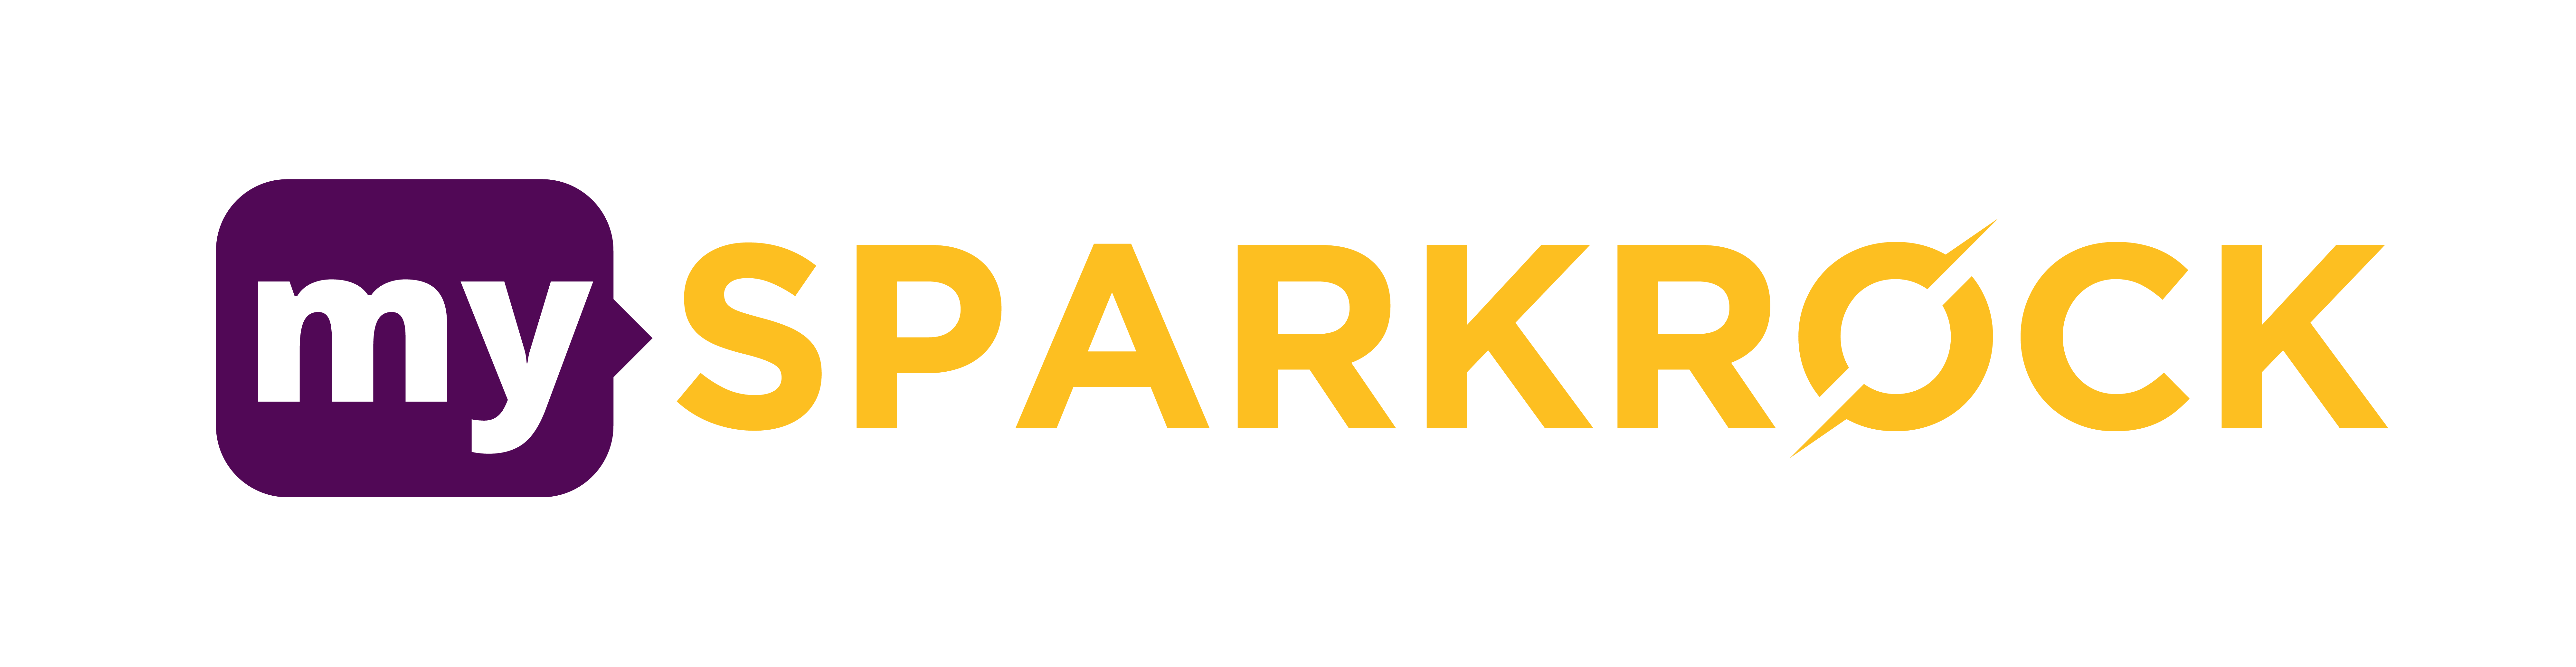 mySparkrock